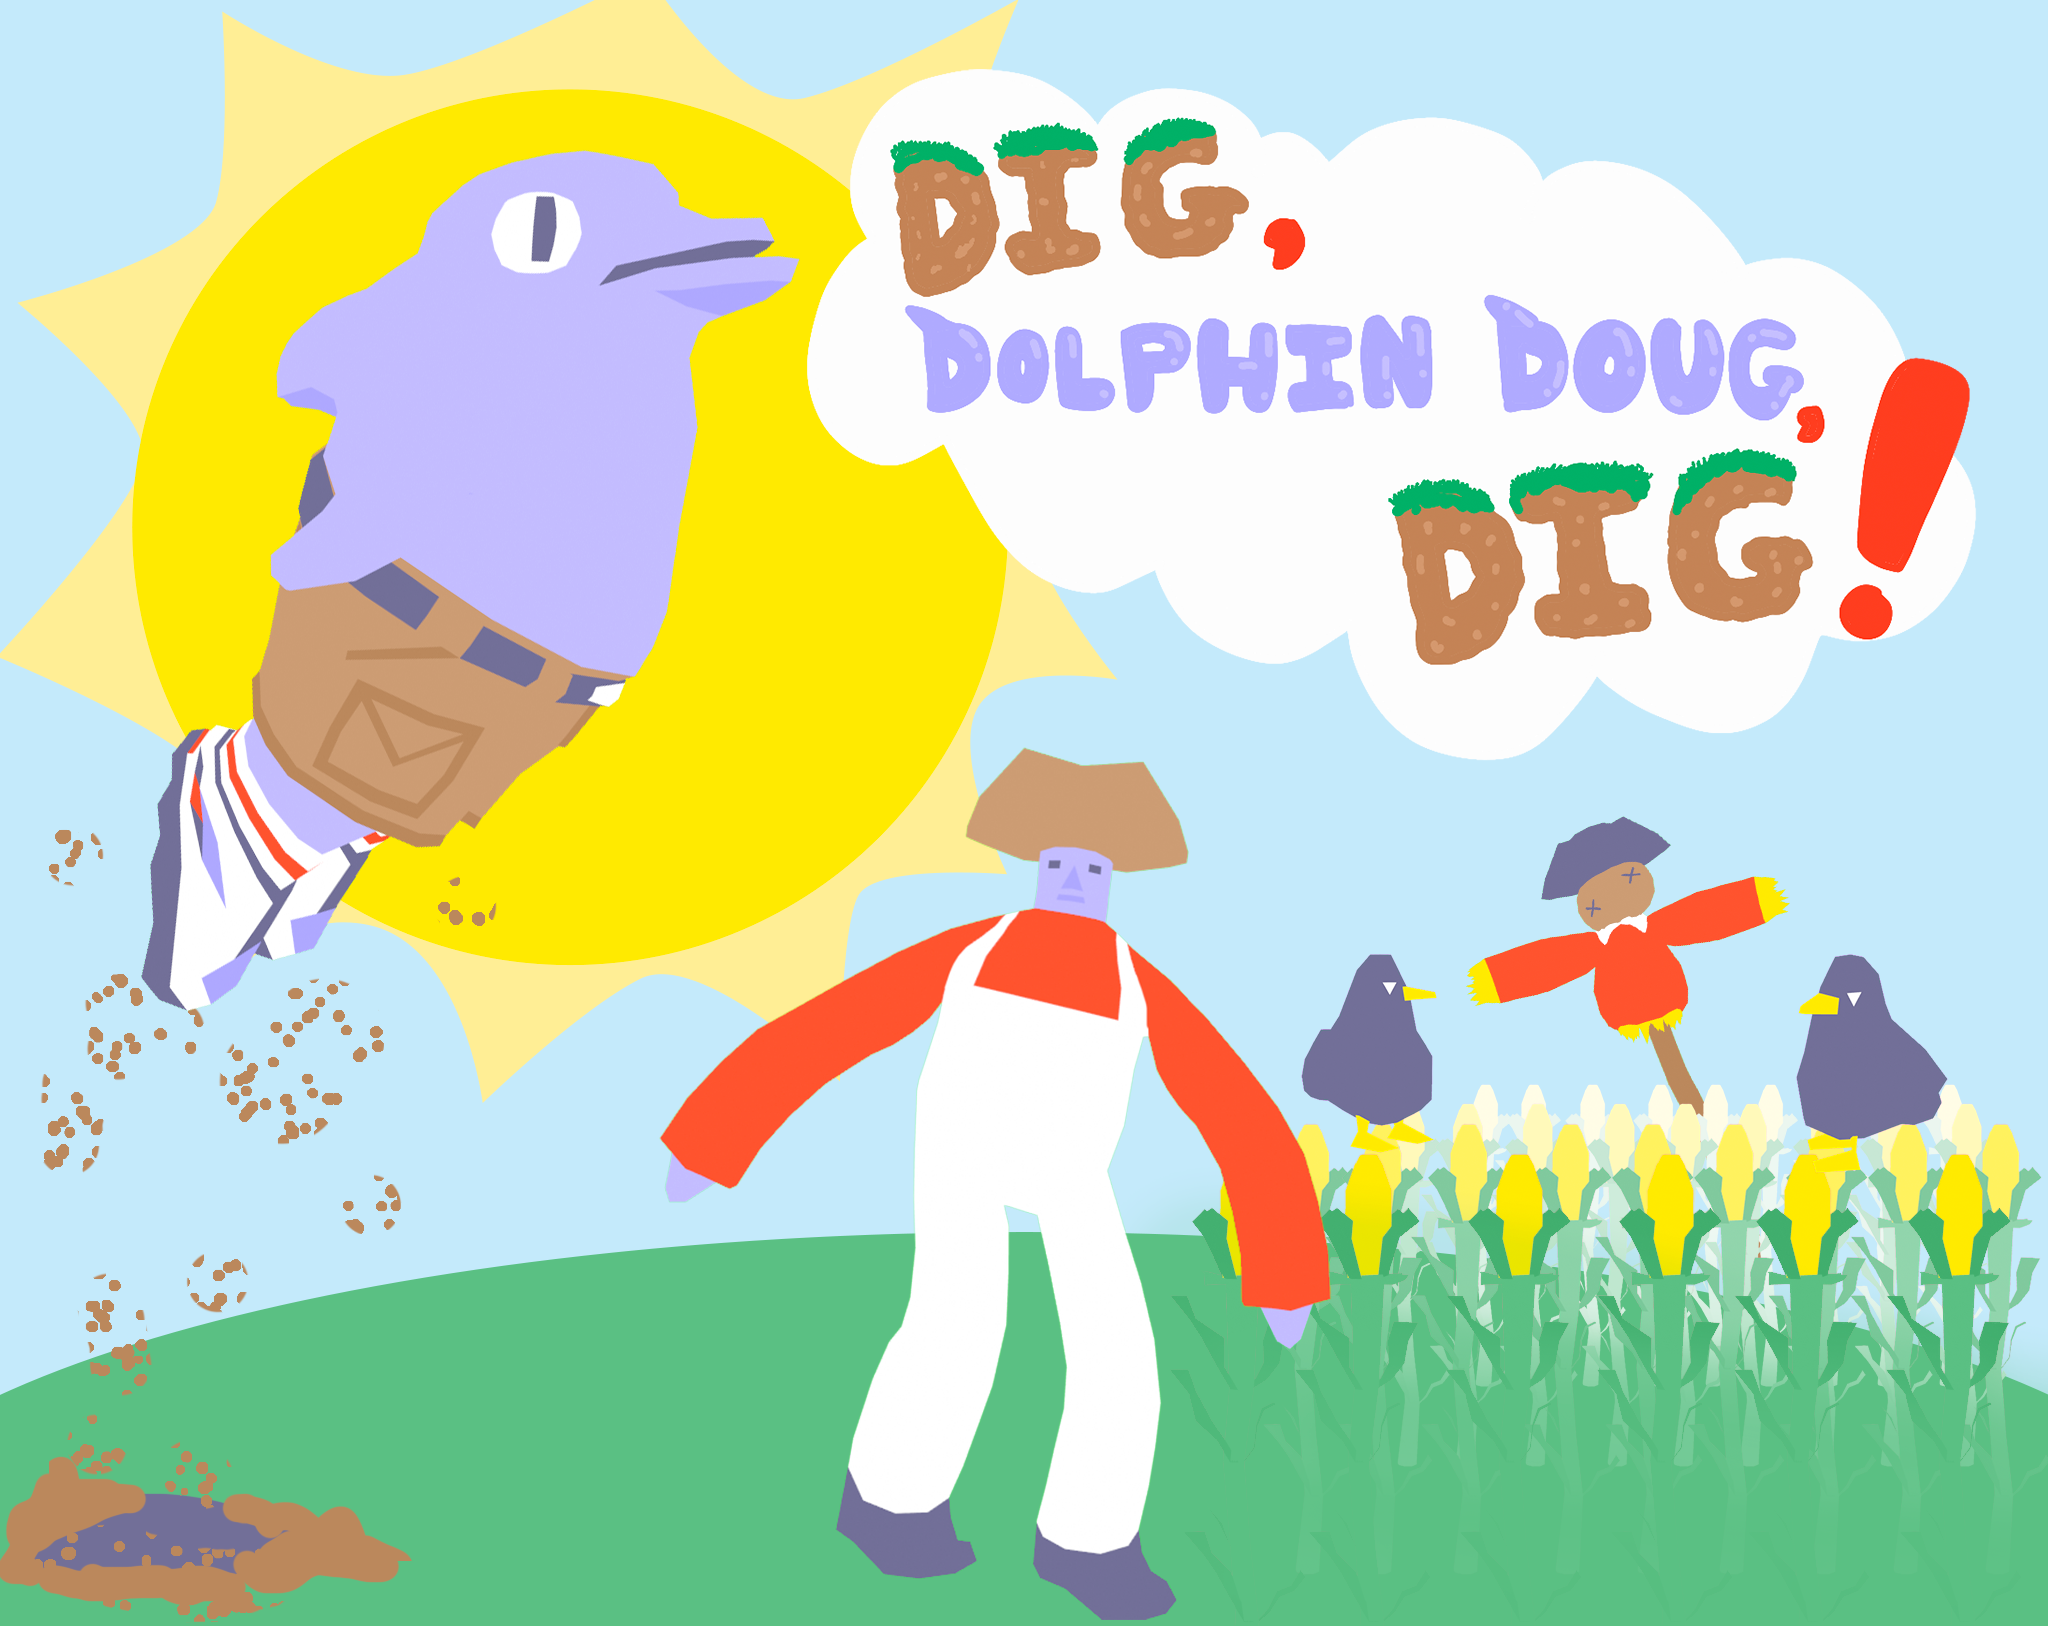 Dig, Dolphin Doug, Dig!